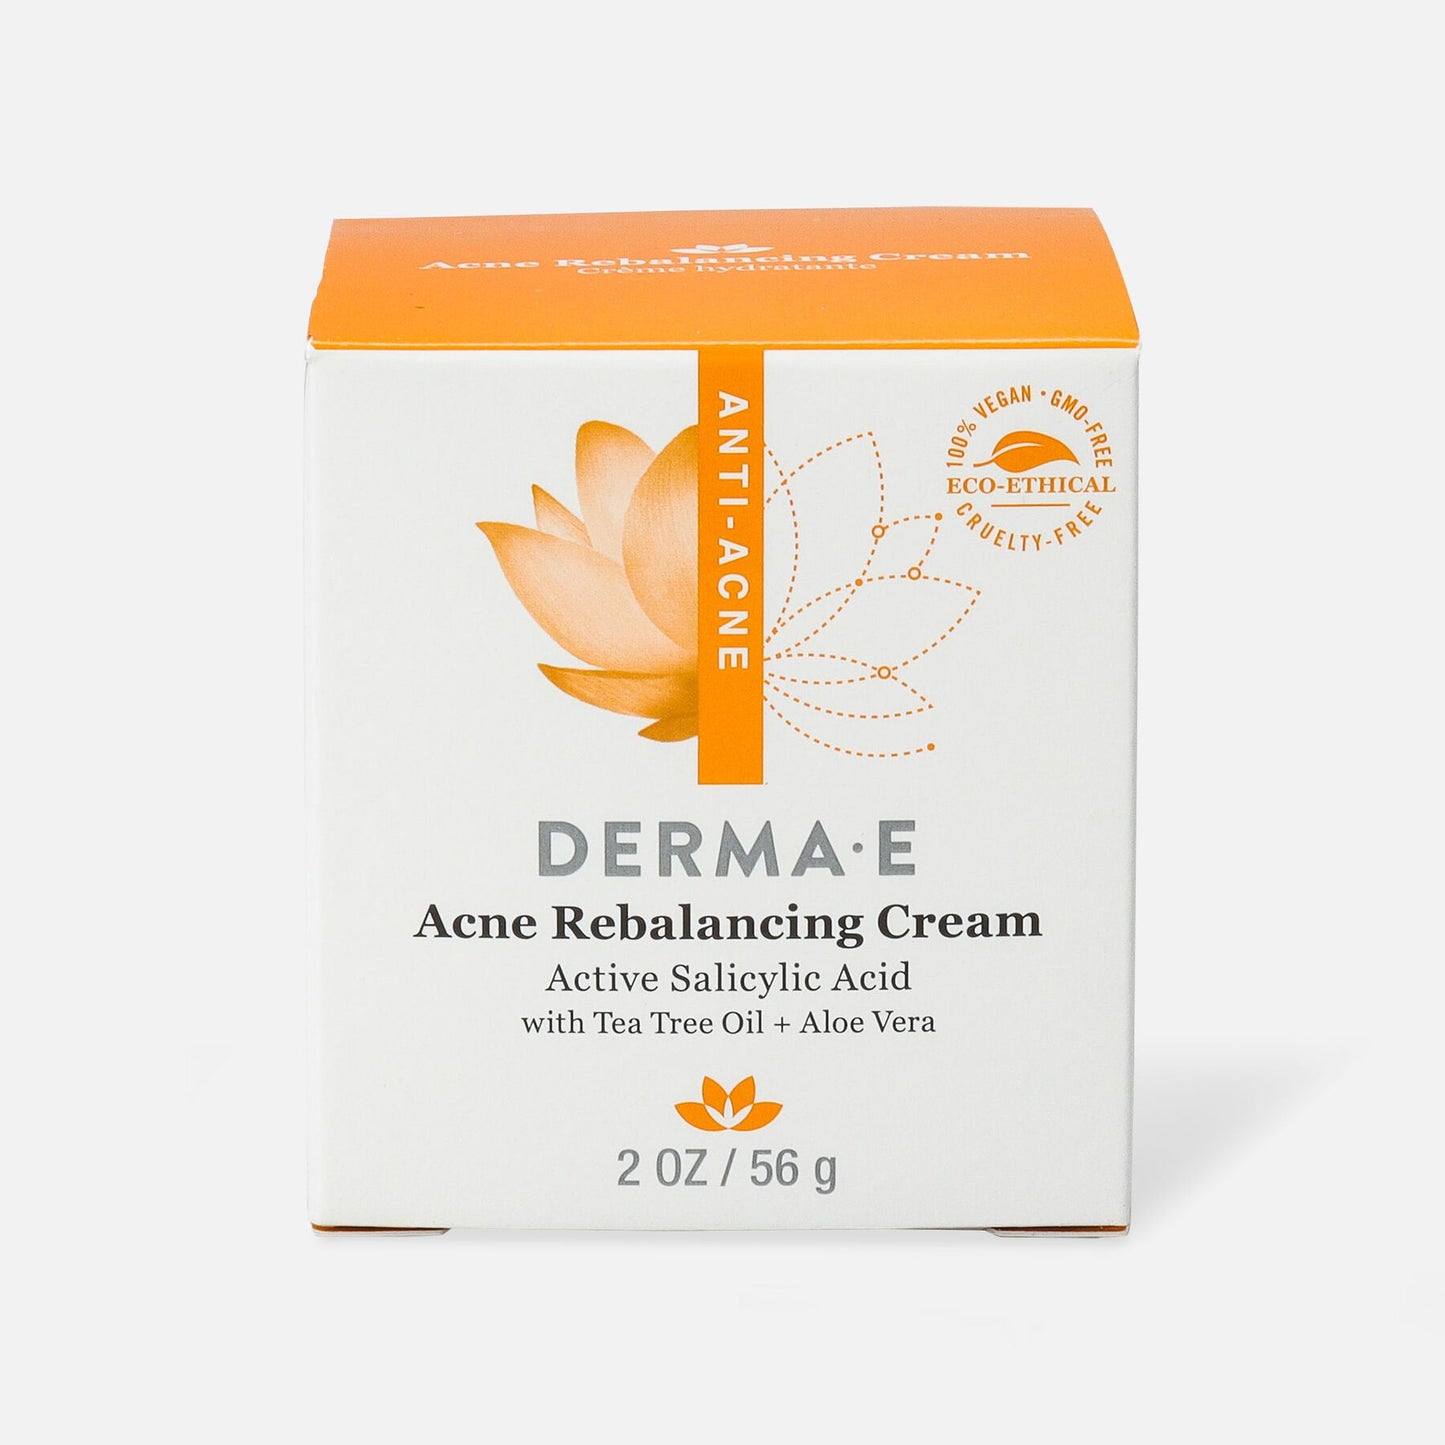 Acne Rebalancing Cream